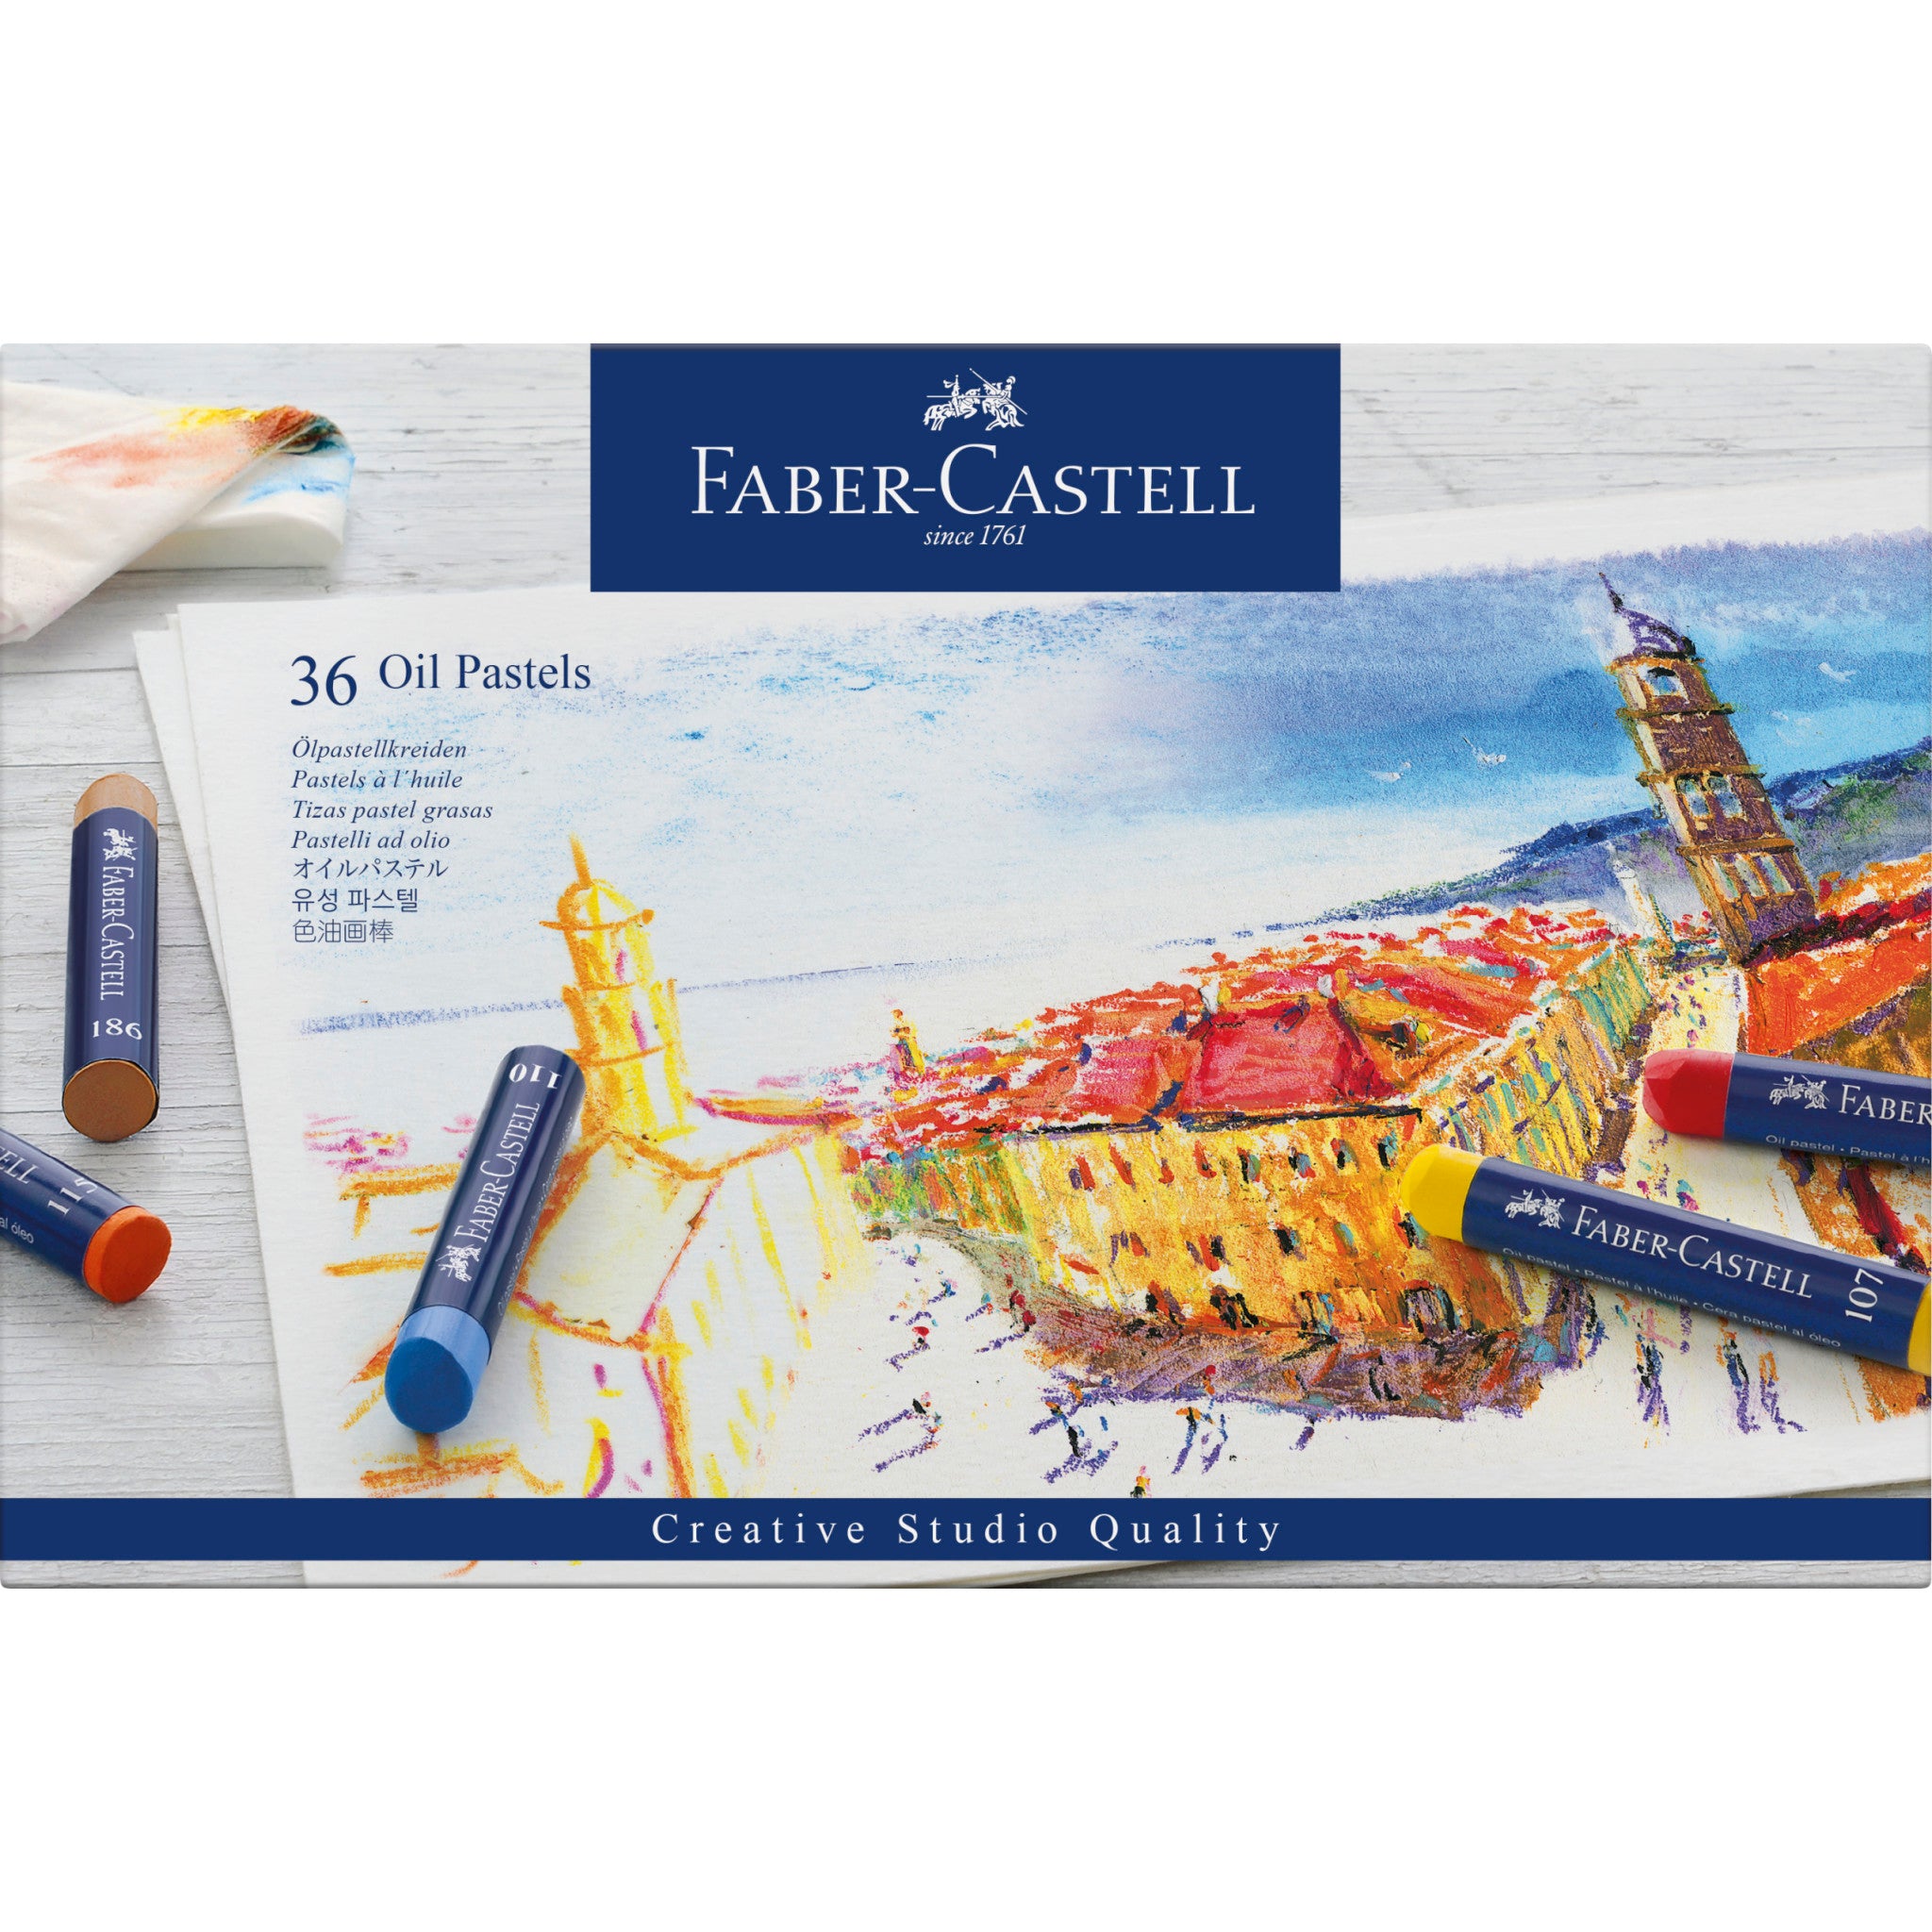 Filia Oil Crayons, 36 Assorted Colors